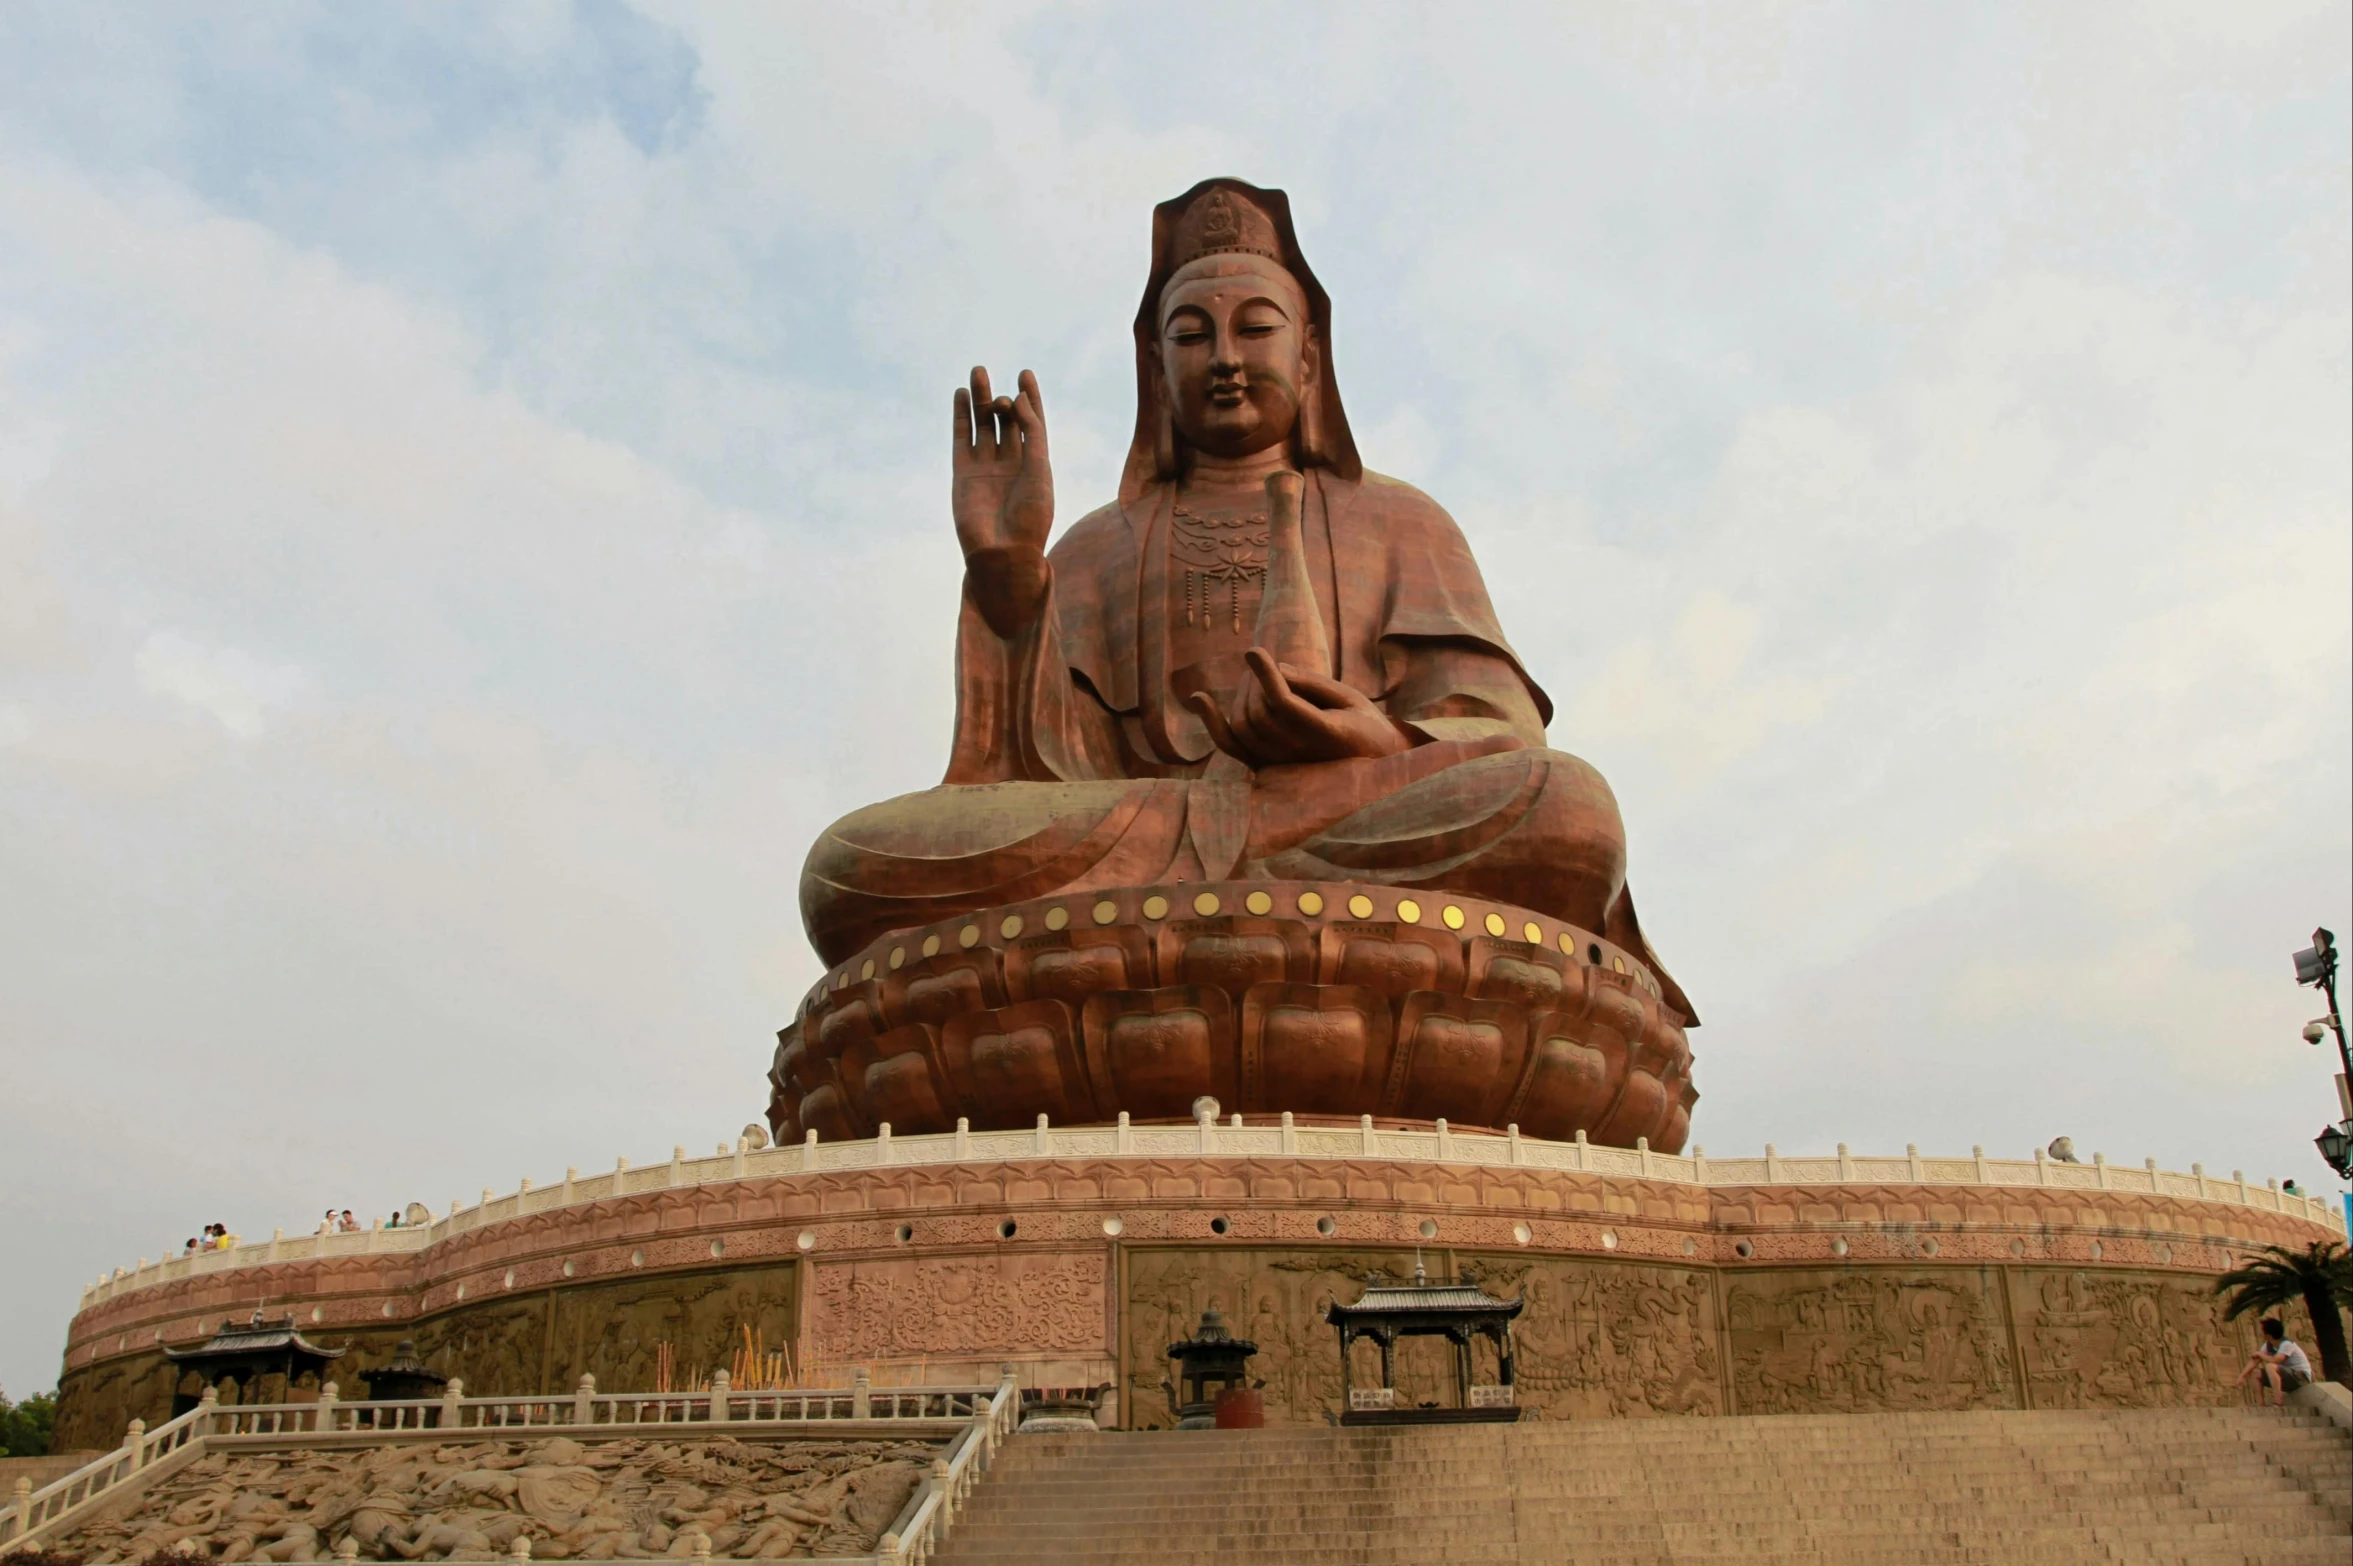 large statue of buddha standing outside near steps